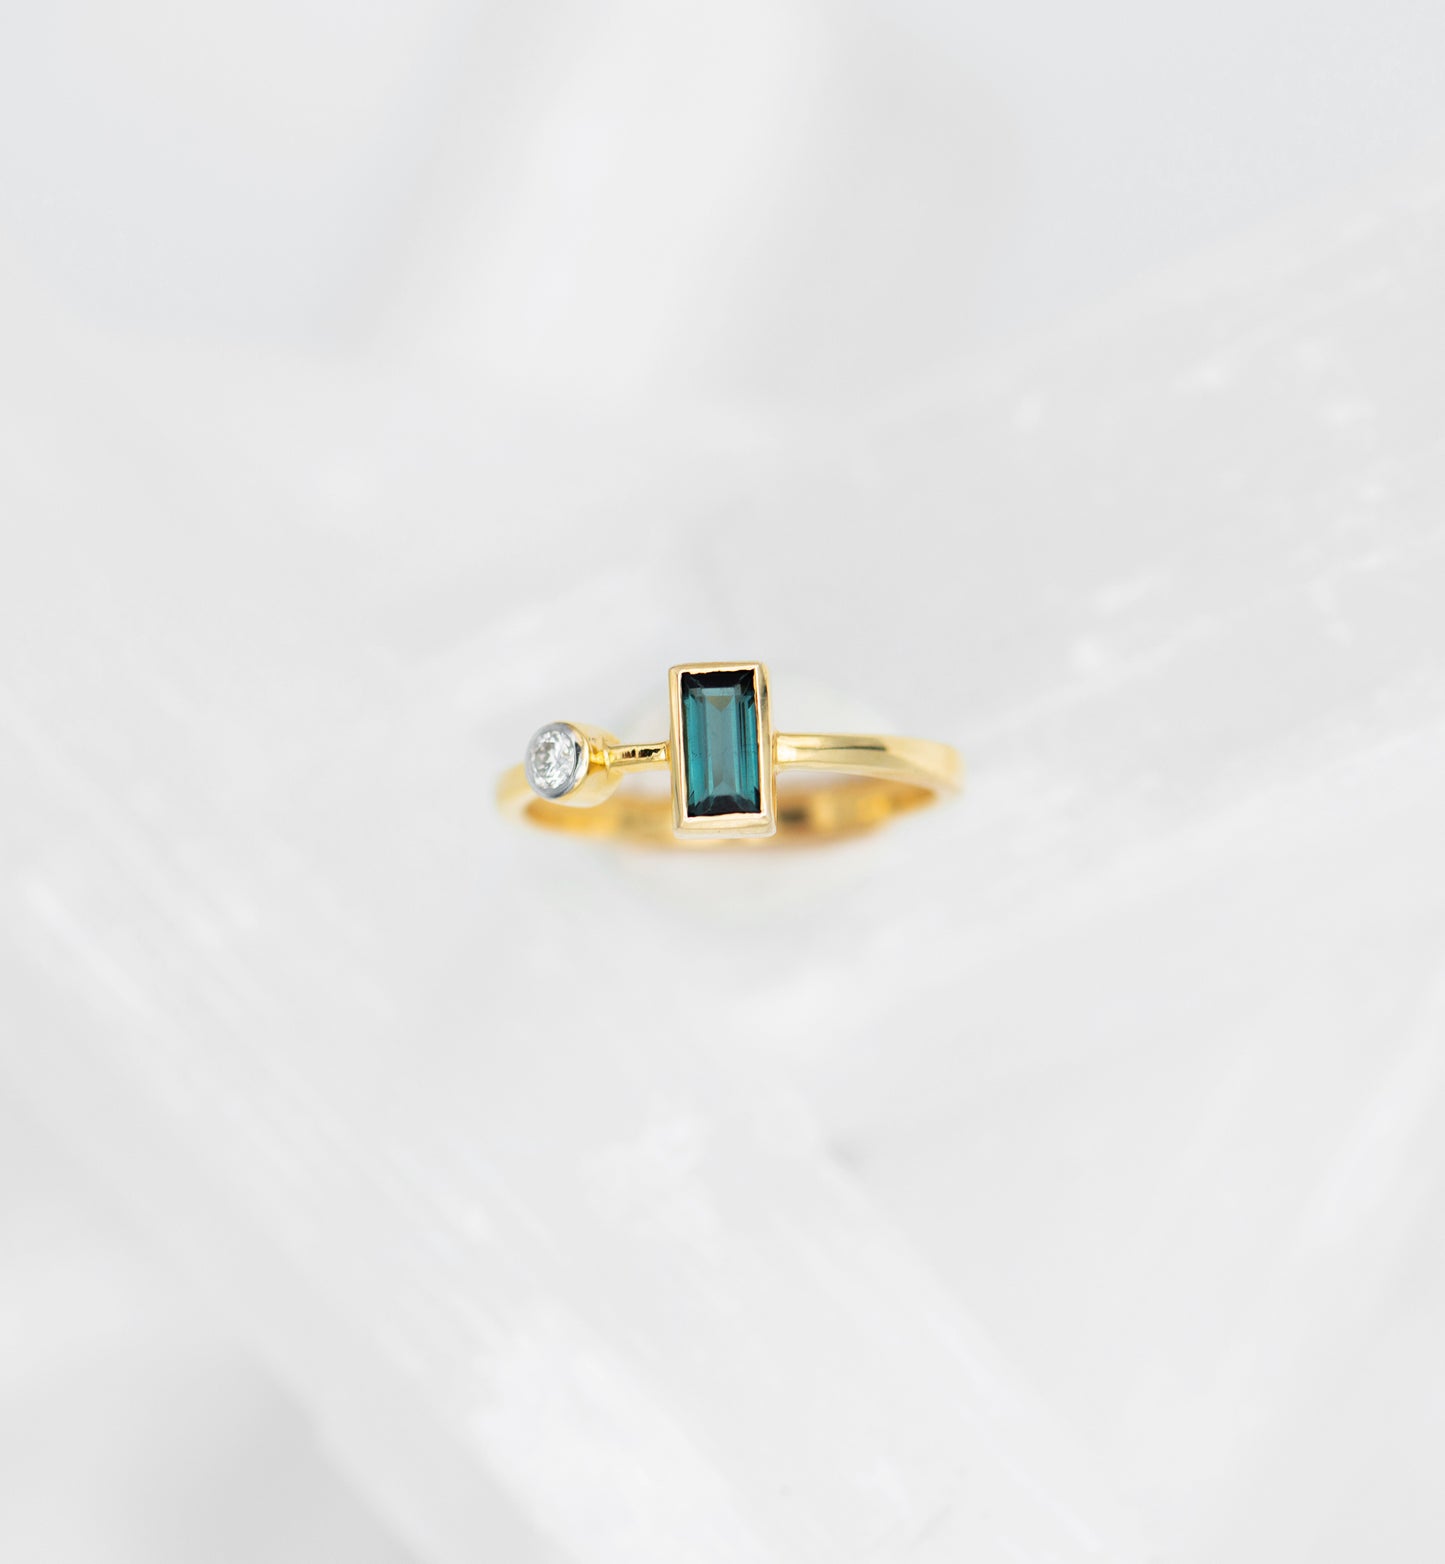 Blue tourmaline and diamond ring